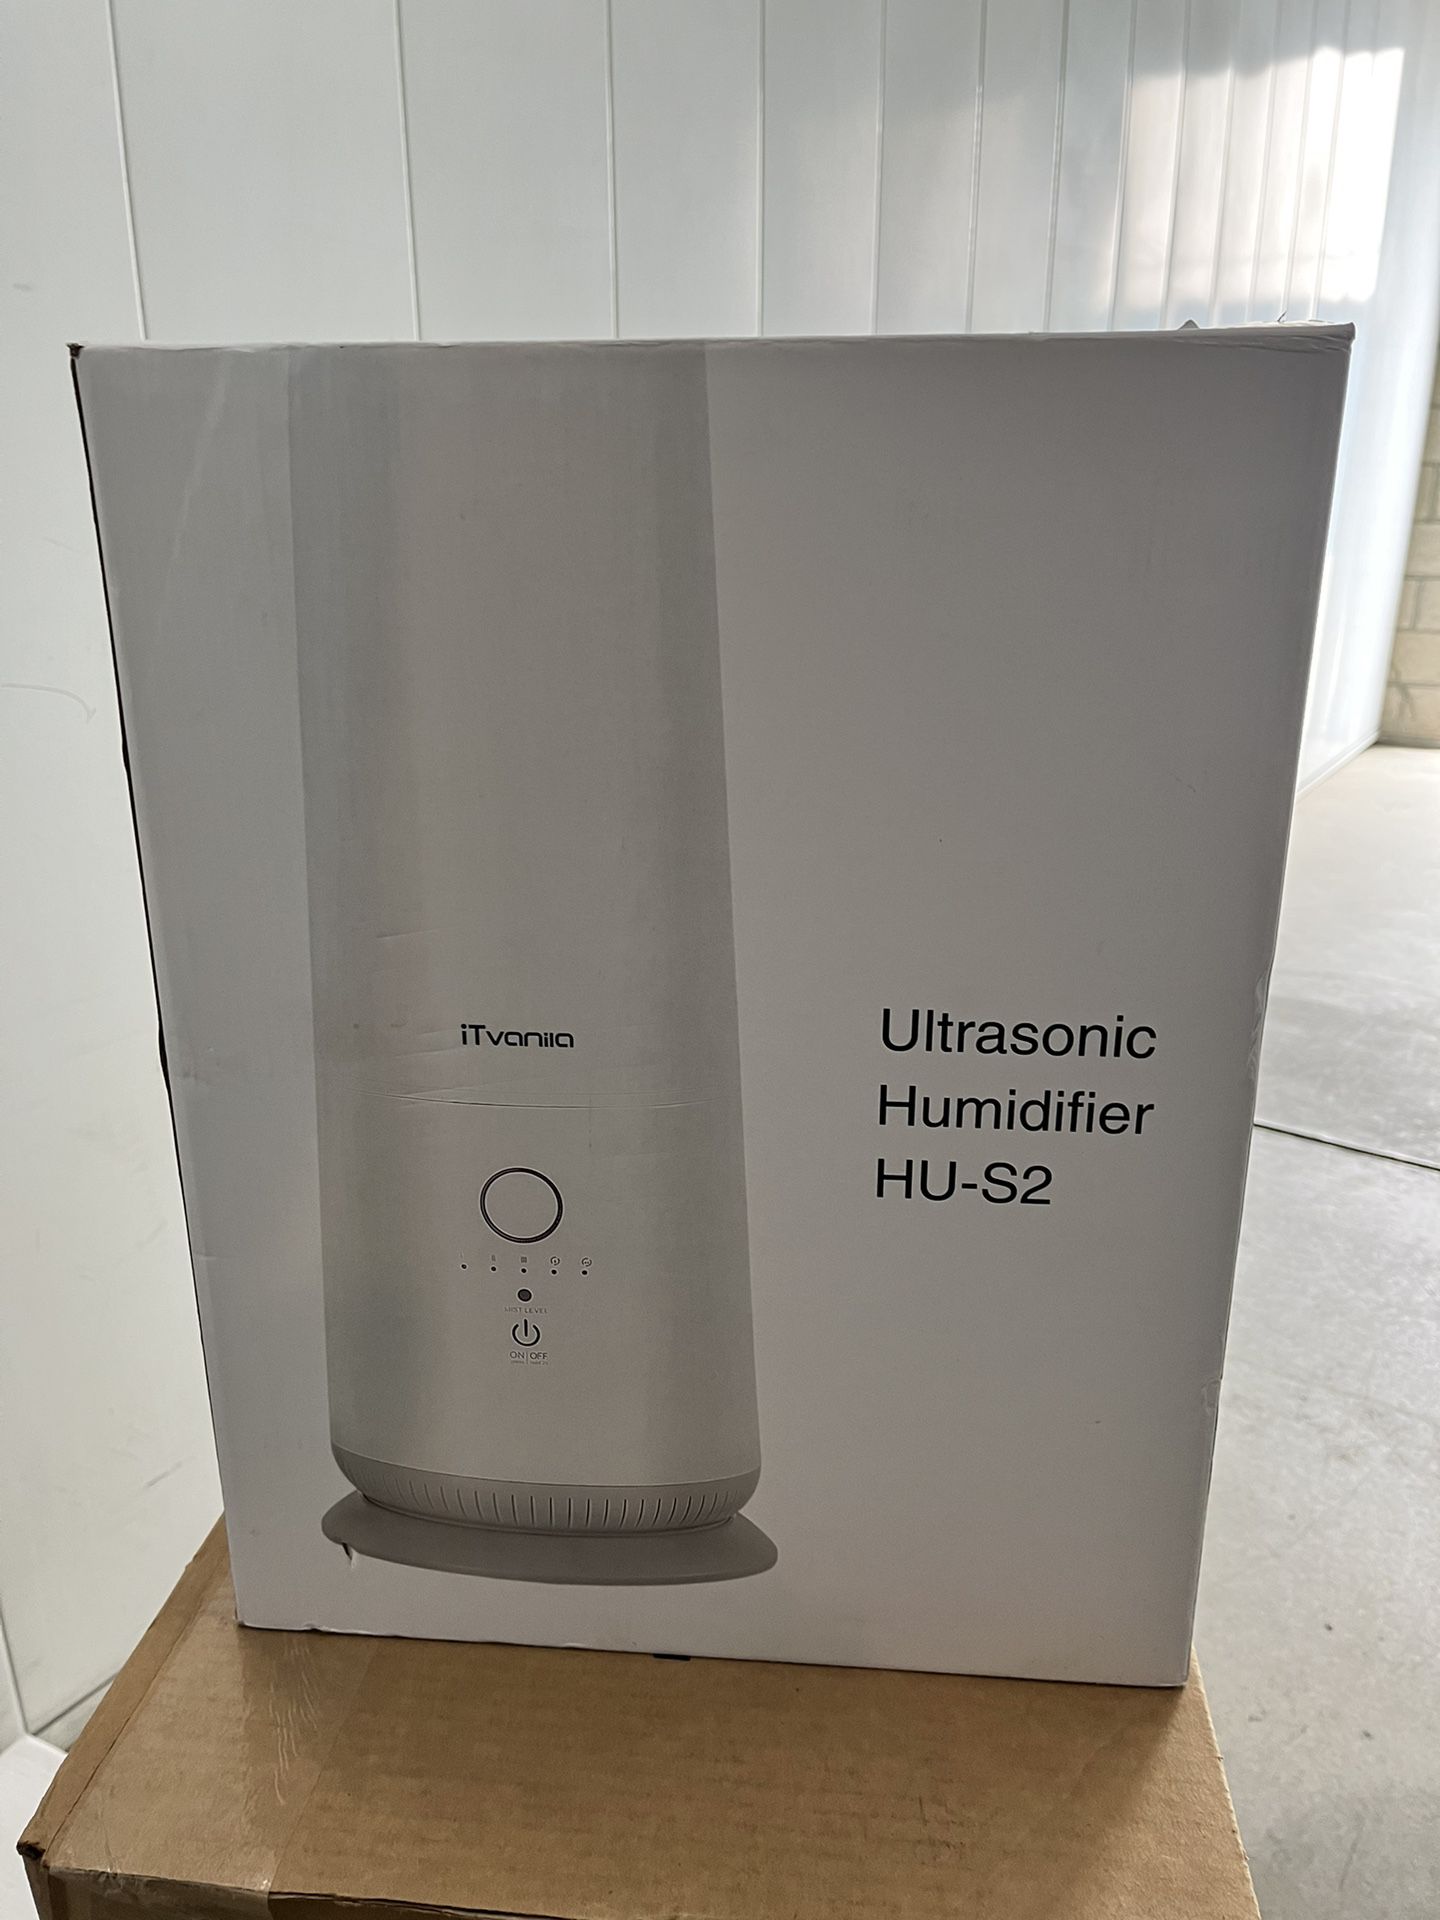 iTvanila Ultrasonic Humidifier HU-S2 - New Open Box - Amazon